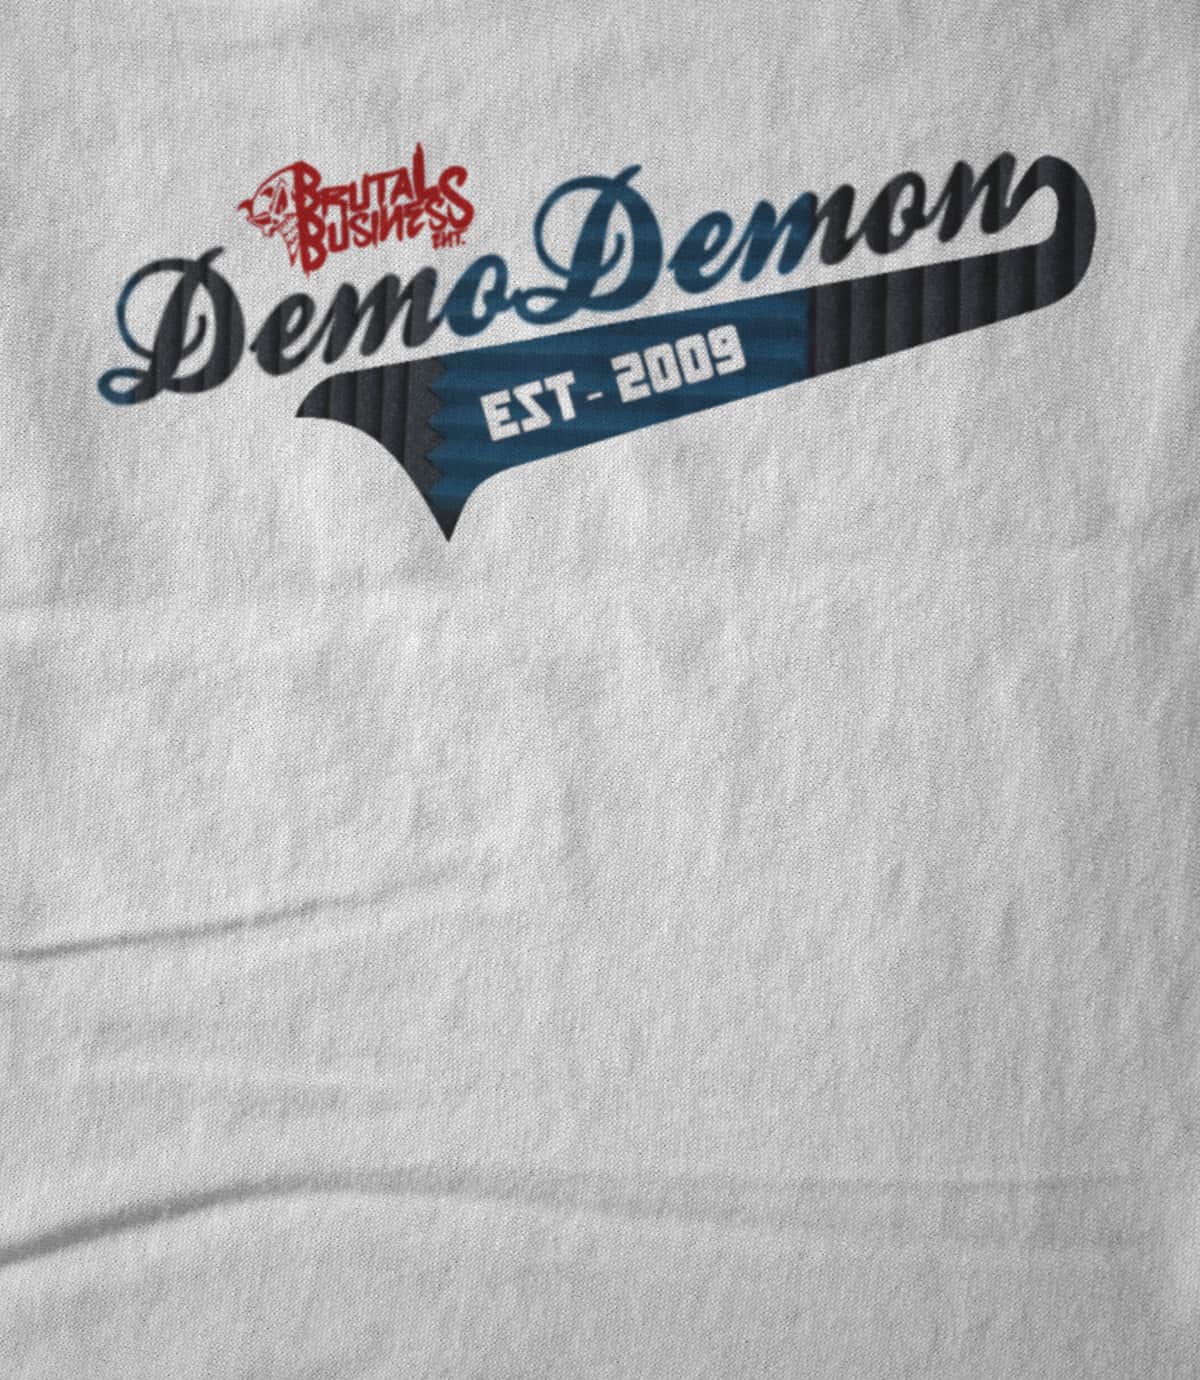 Demo demon est   2009 1596495000